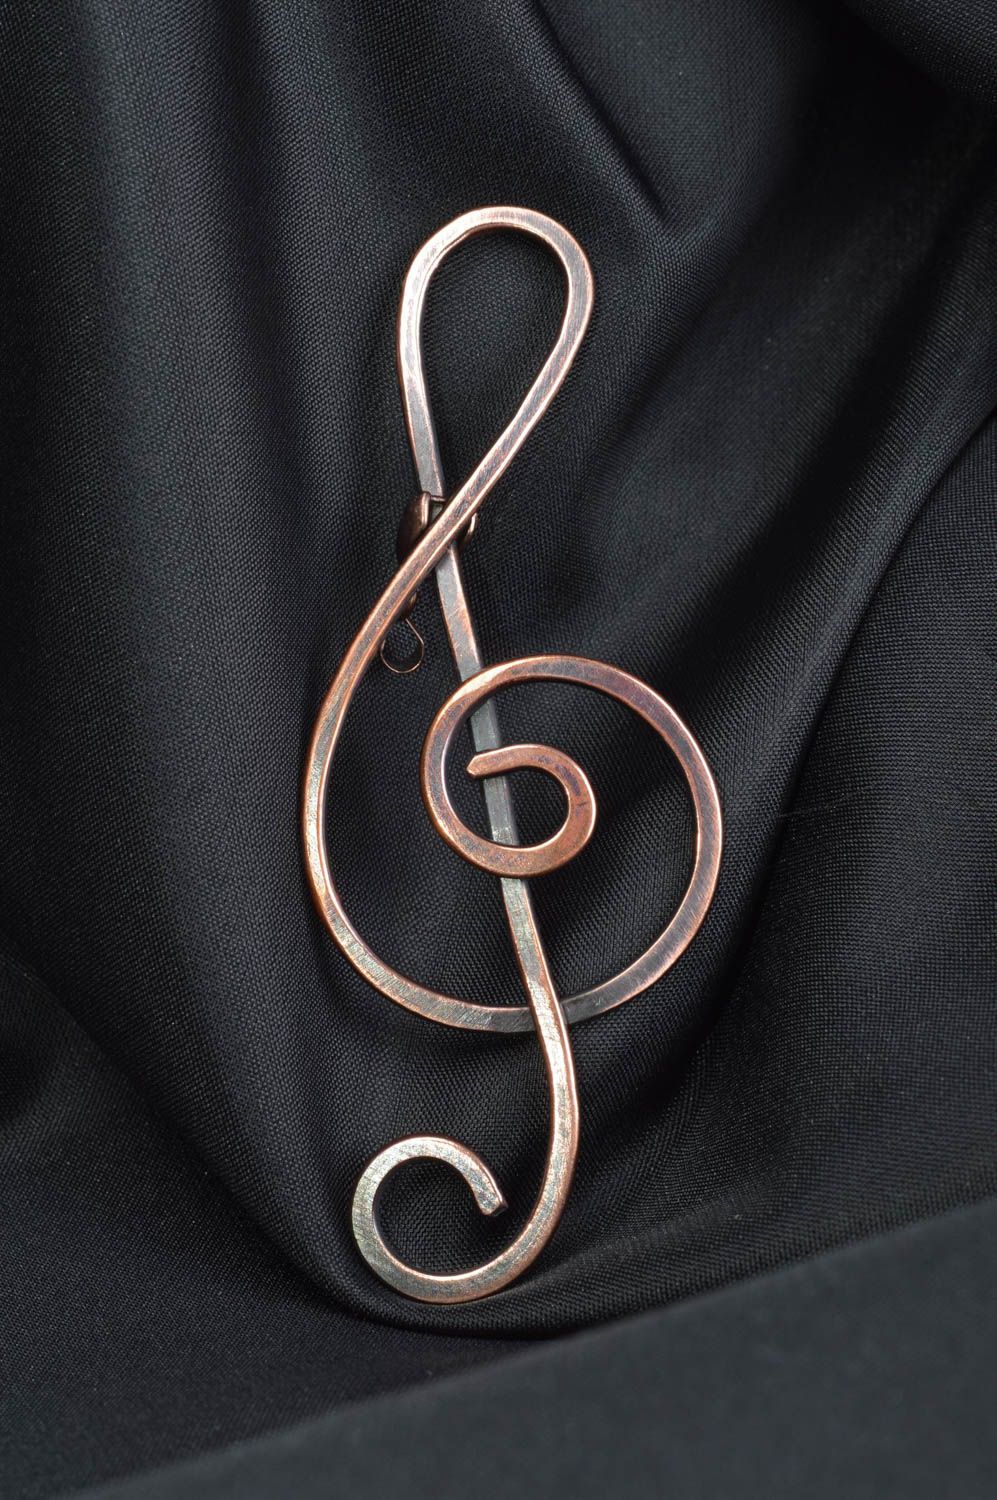 Treble clef necklace handmade copper pendant necklace fashion jewelry photo 1